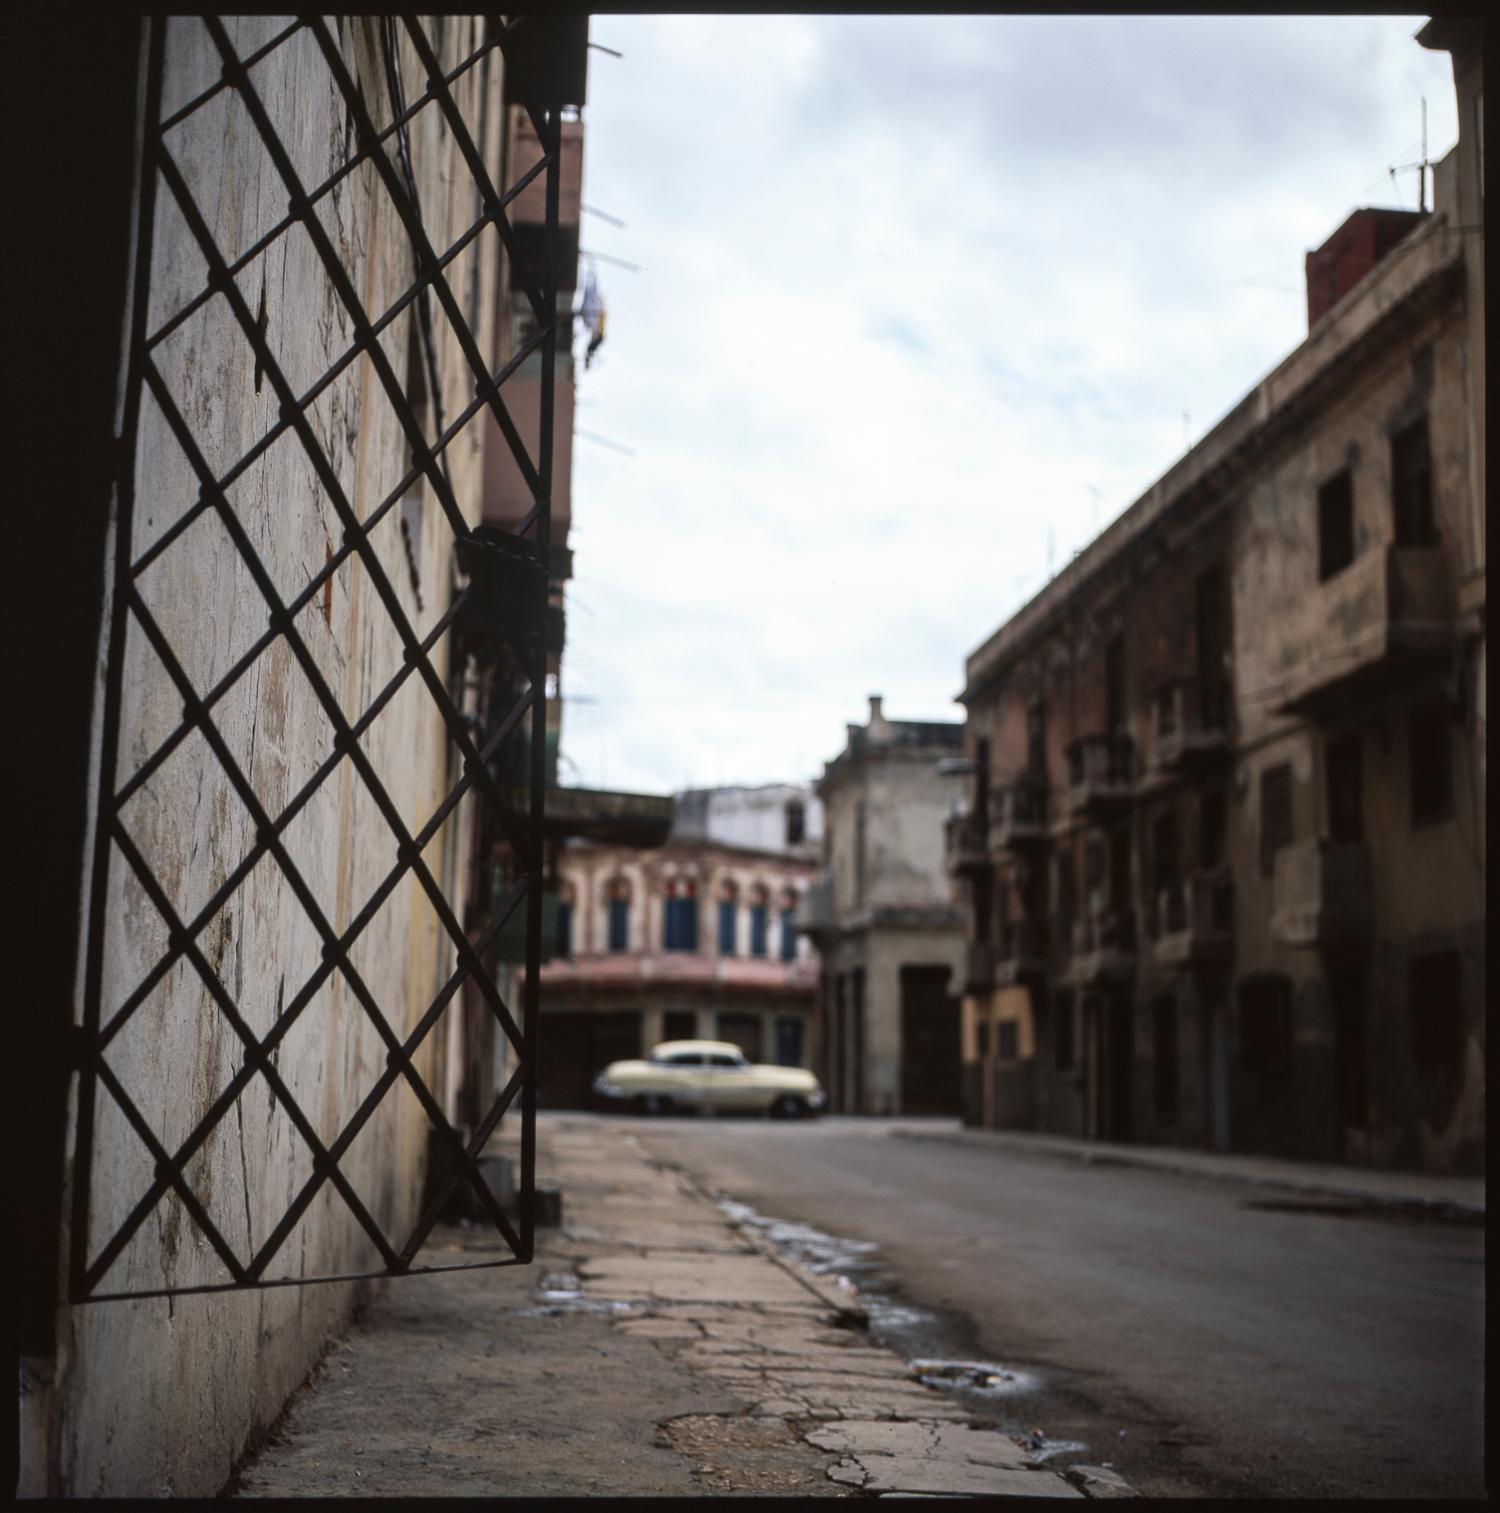 Paul Cooklin Landscape Photograph - Edition 2/10 - Deserted Street, Havana, Cuba, C-Type Photograph